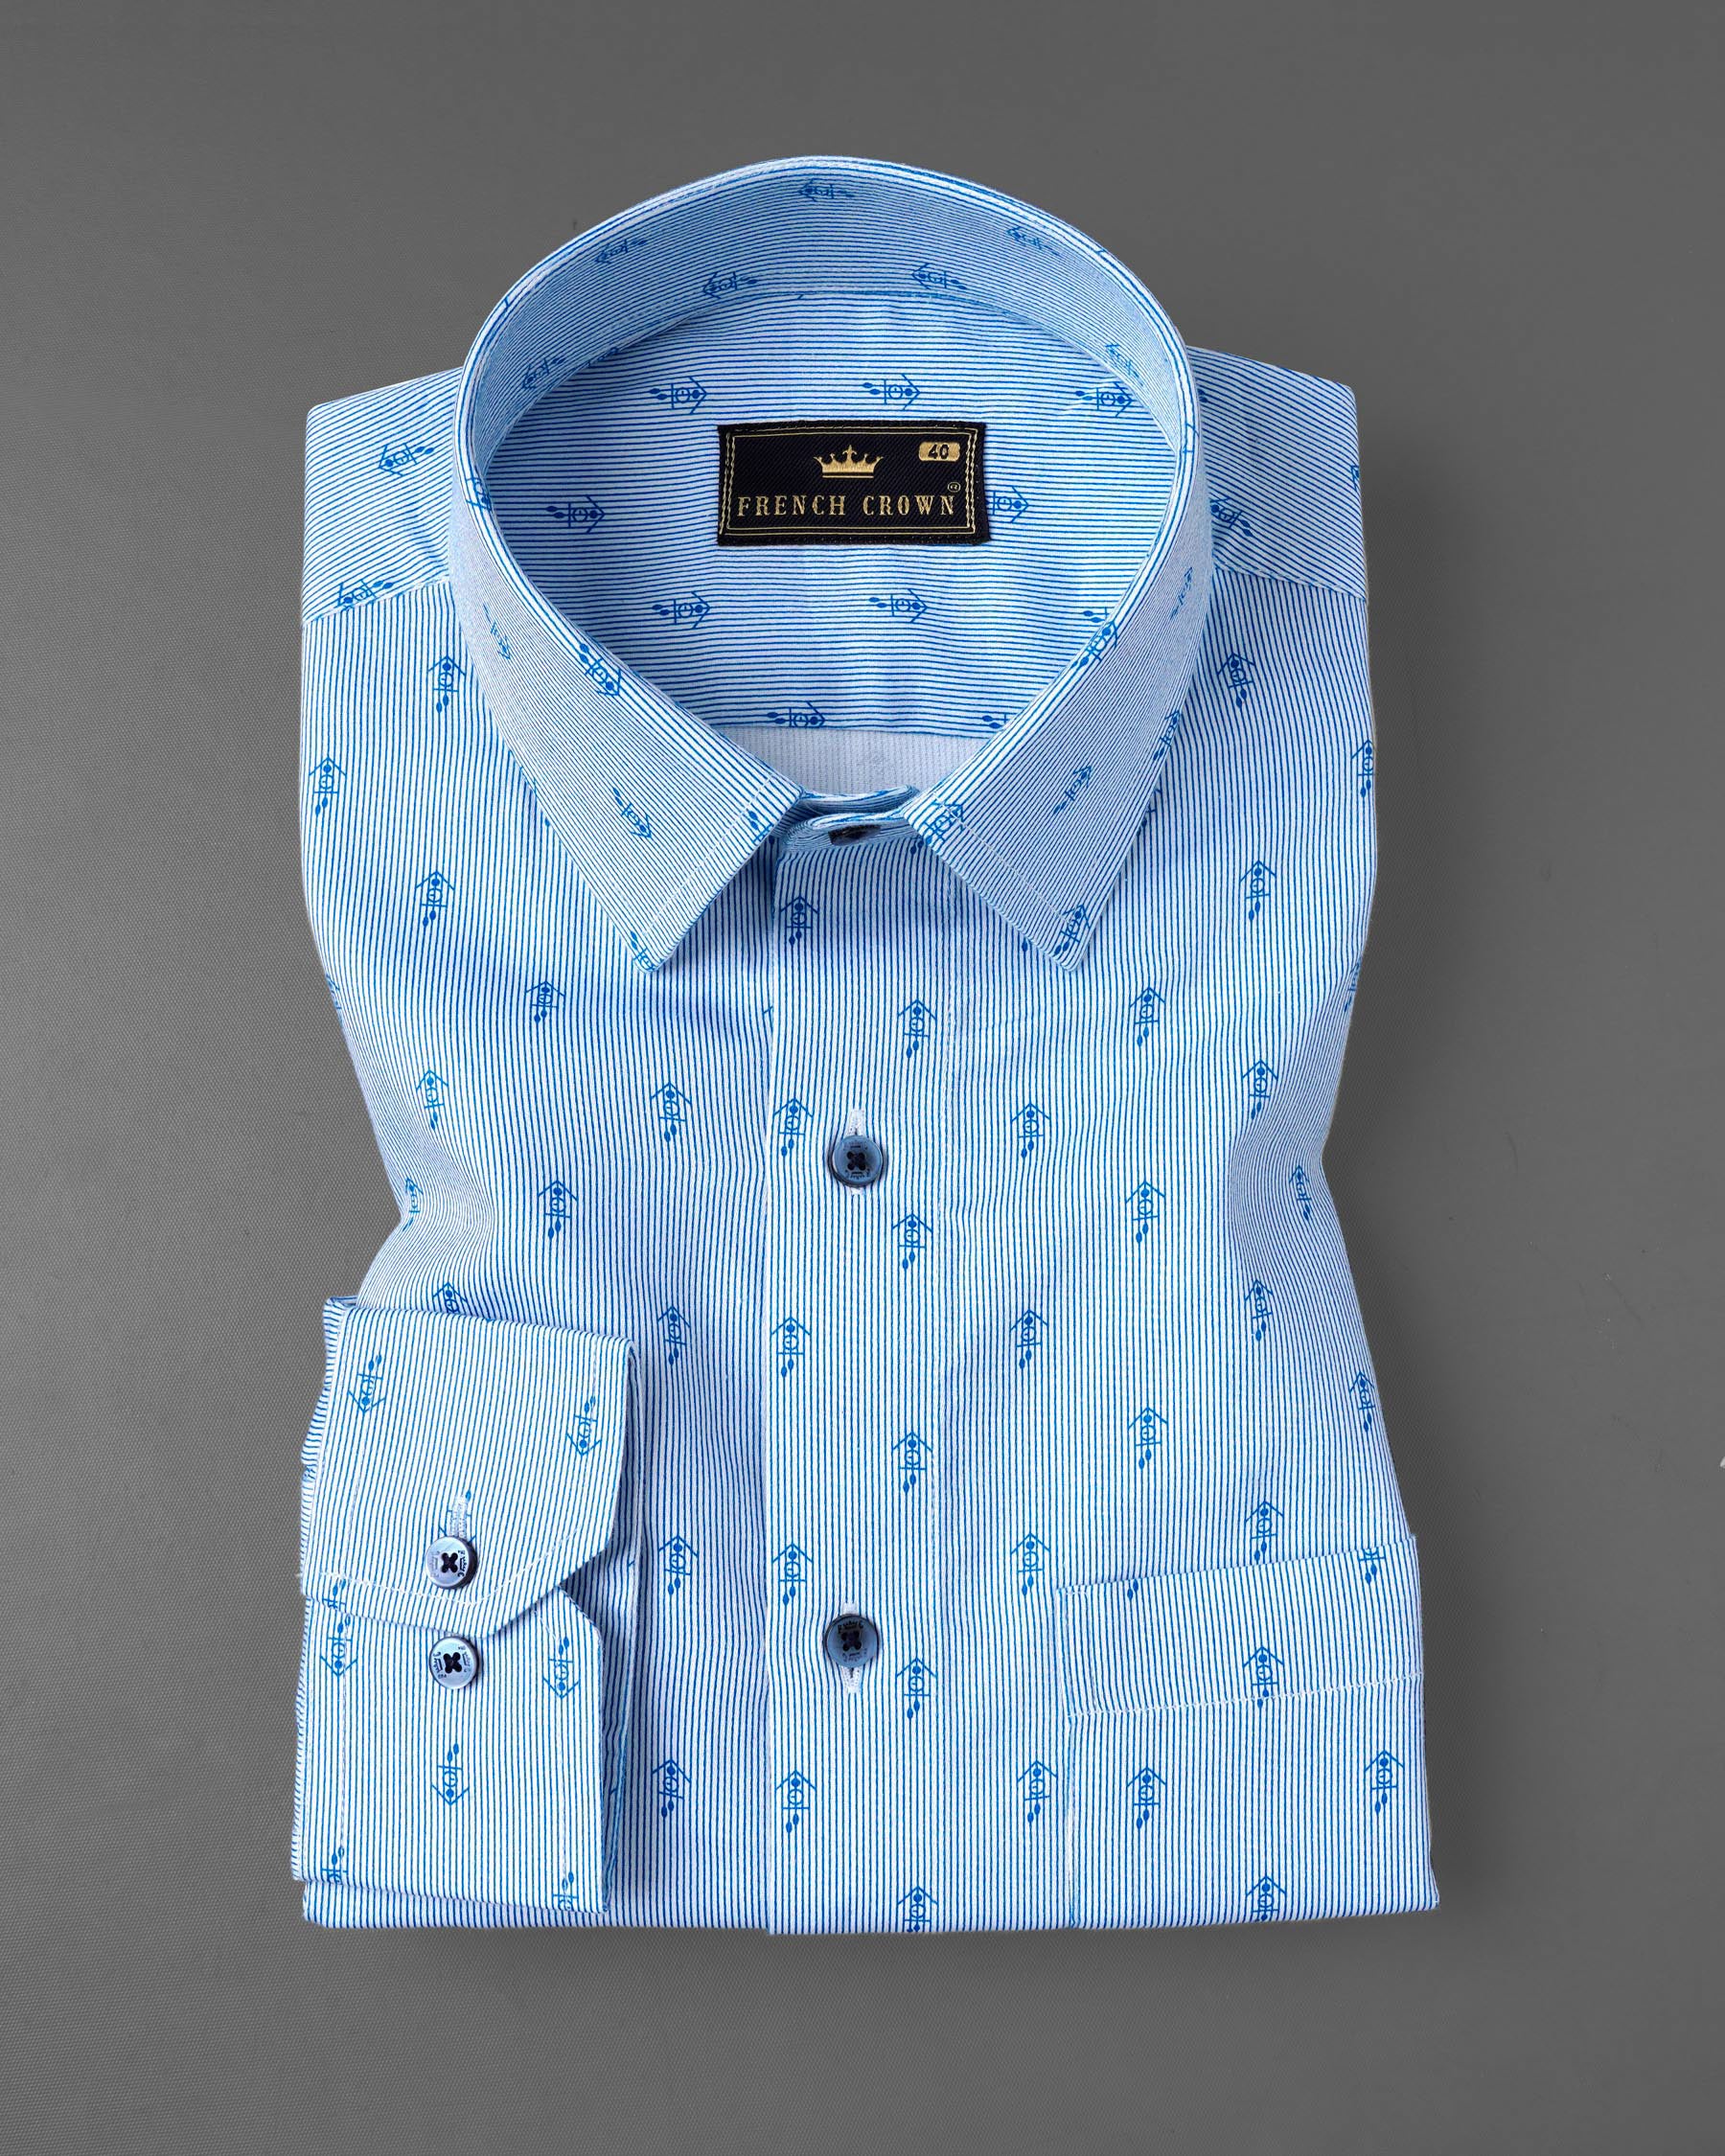 Curious Blue Striped and Anchor Printed Super Soft Premium Cotton Shirt 7622-BLE-38, 7622-BLE-H-38, 7622-BLE-39,7622-BLE-H-39, 7622-BLE-40, 7622-BLE-H-40, 7622-BLE-42, 7622-BLE-H-42, 7622-BLE-44, 7622-BLE-H-44, 7622-BLE-46, 7622-BLE-H-46, 7622-BLE-48, 7622-BLE-H-48, 7622-BLE-50, 7622-BLE-H-50, 7622-BLE-52, 7622-BLE-H-52